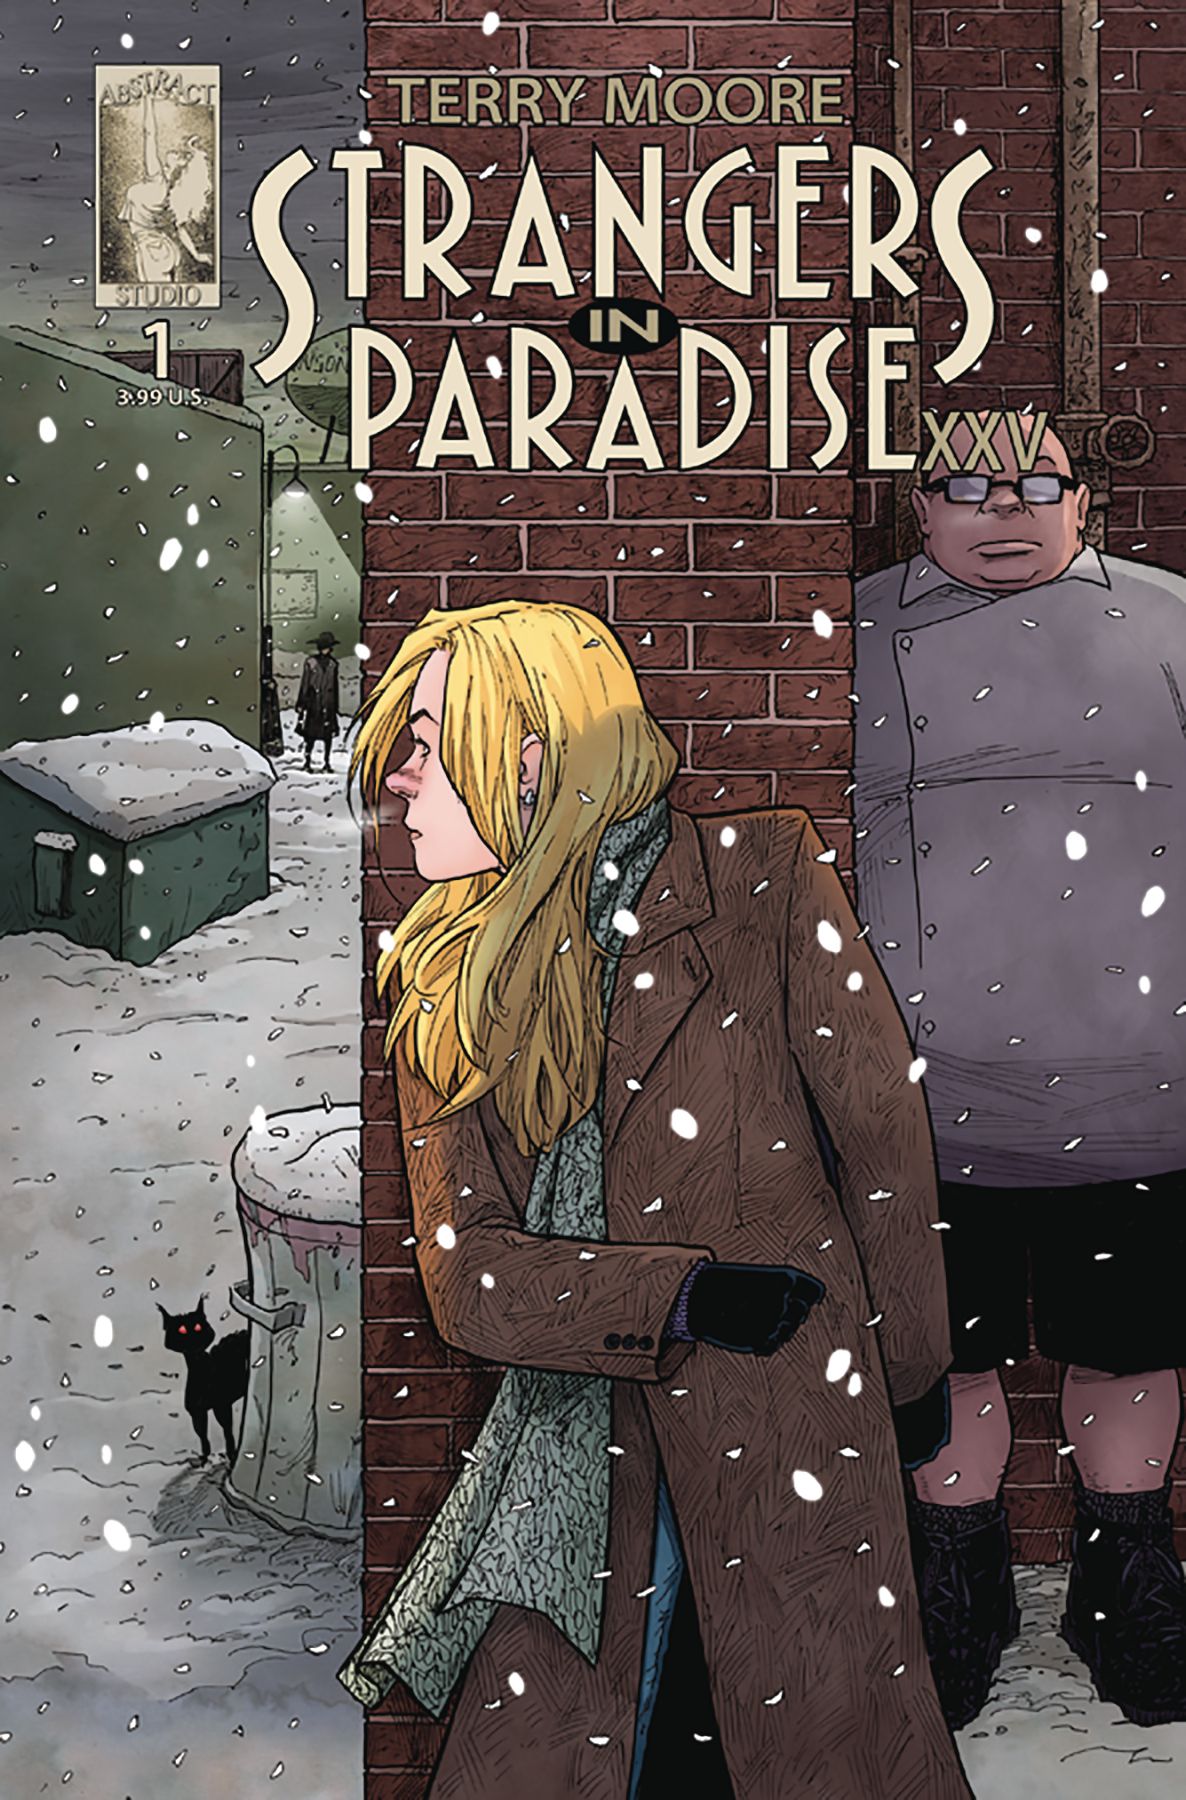 Strangers in Paradise XXV #2 Comic